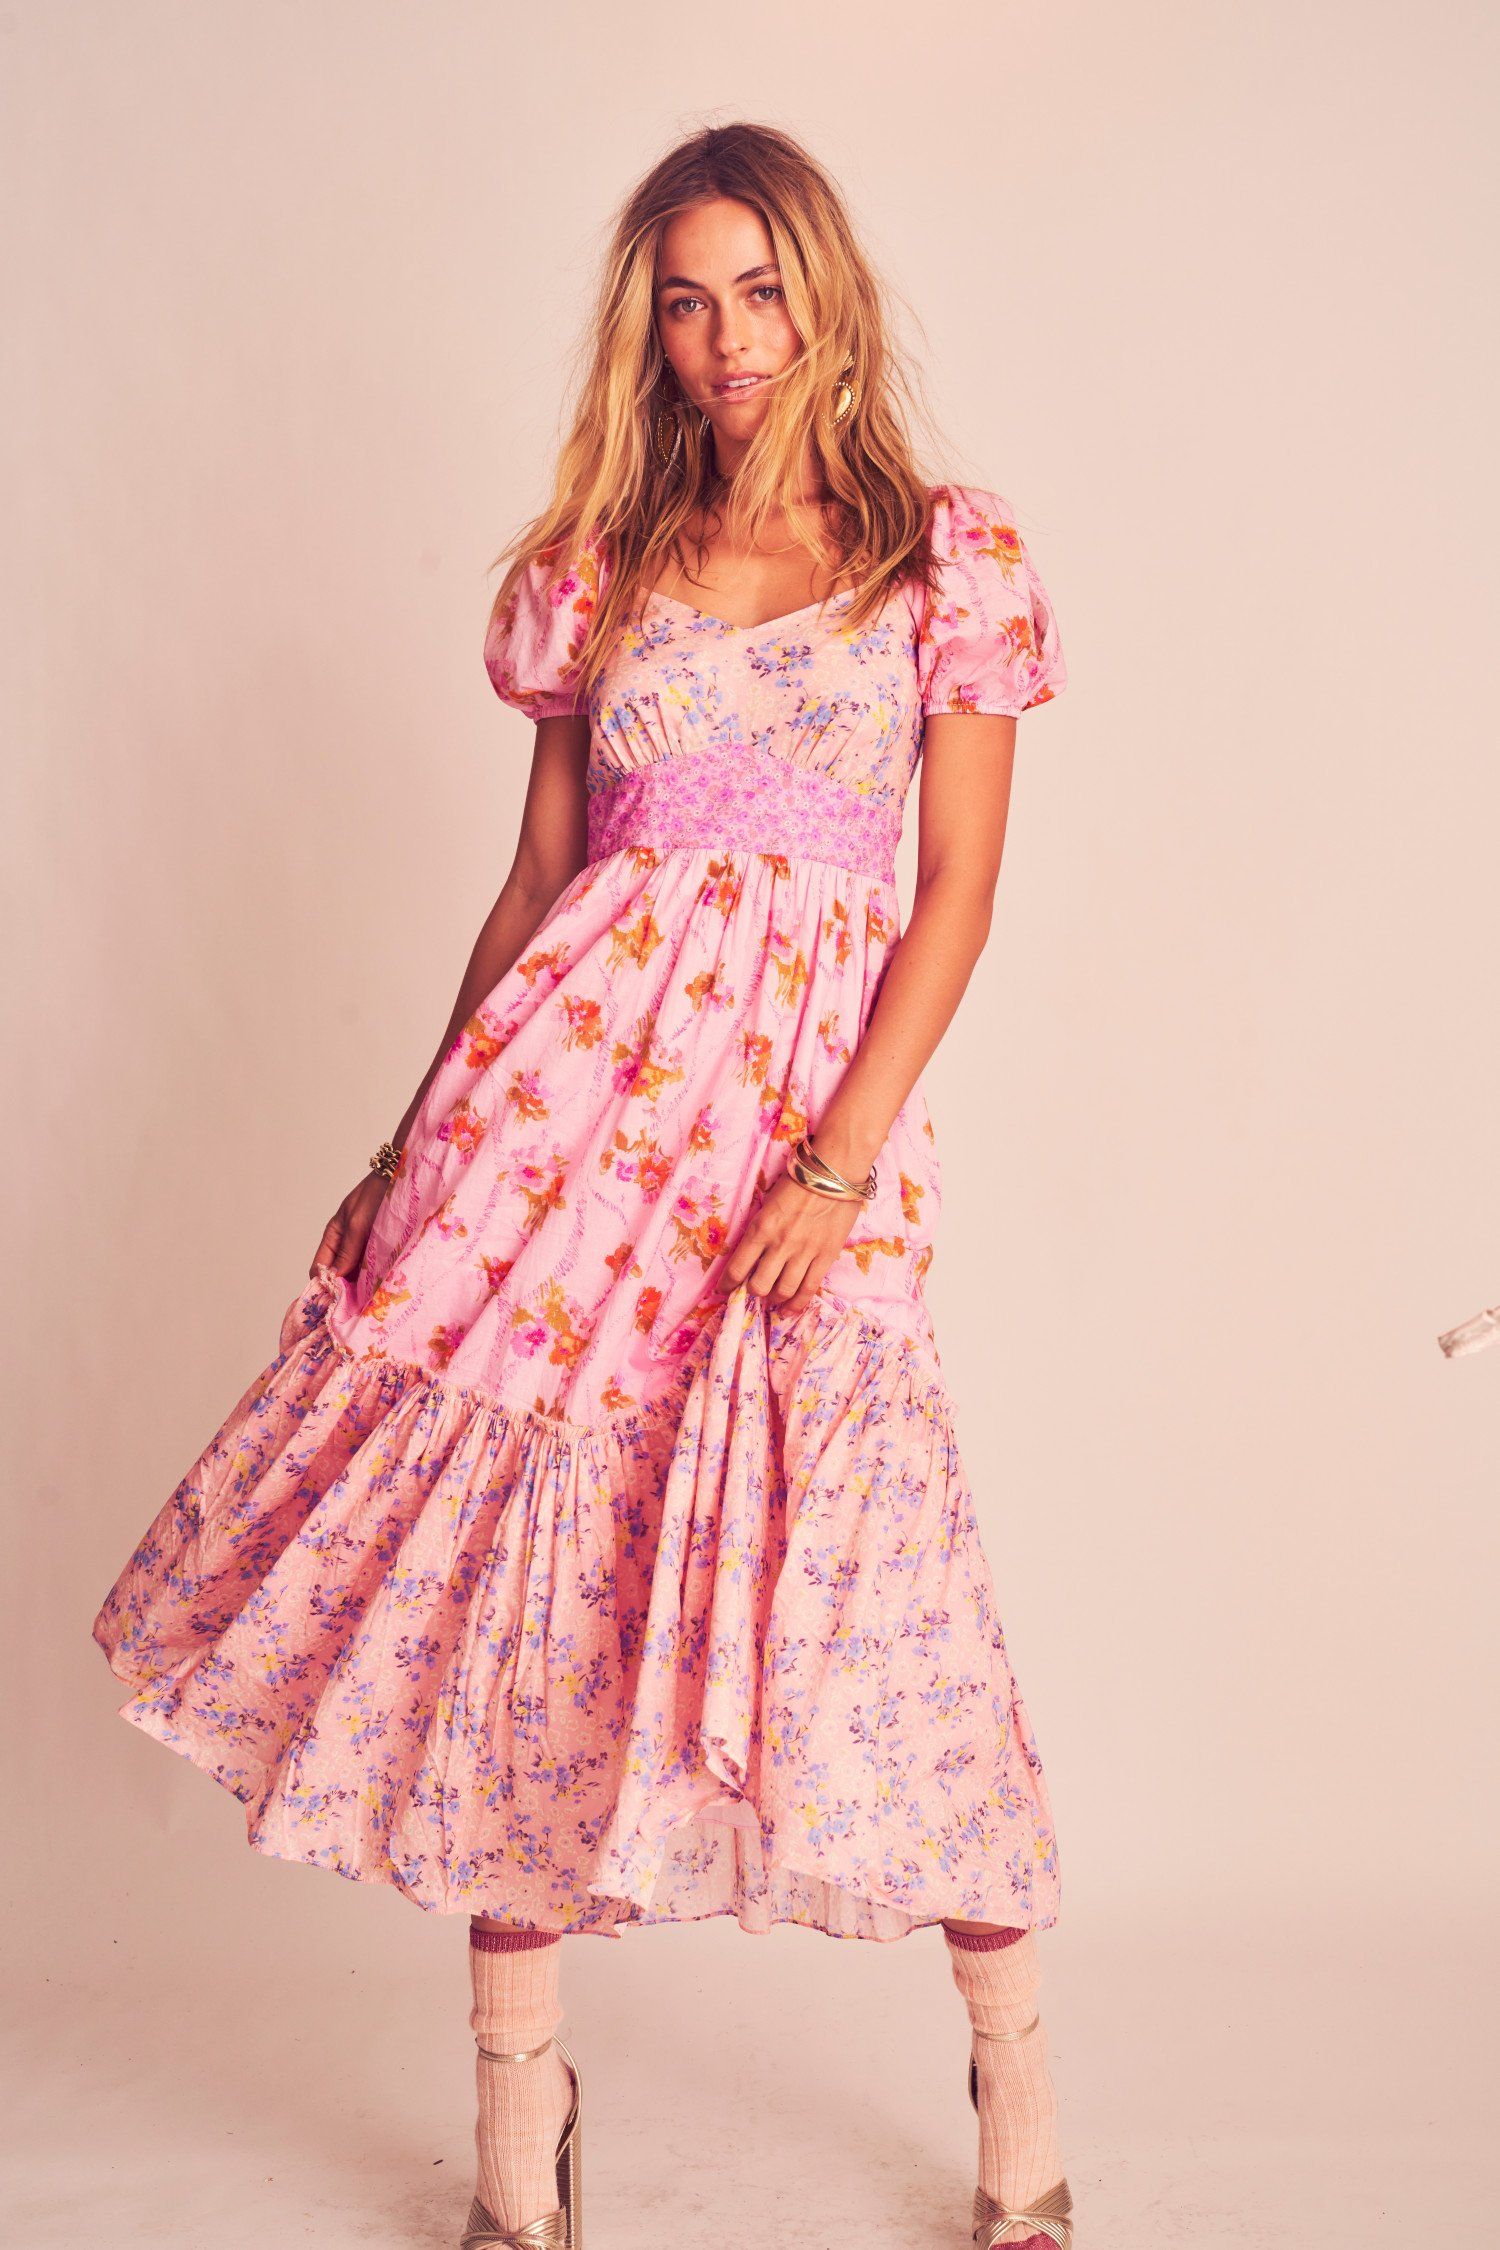 19 Stylish Summer Dresses 2021 - Pretty ...